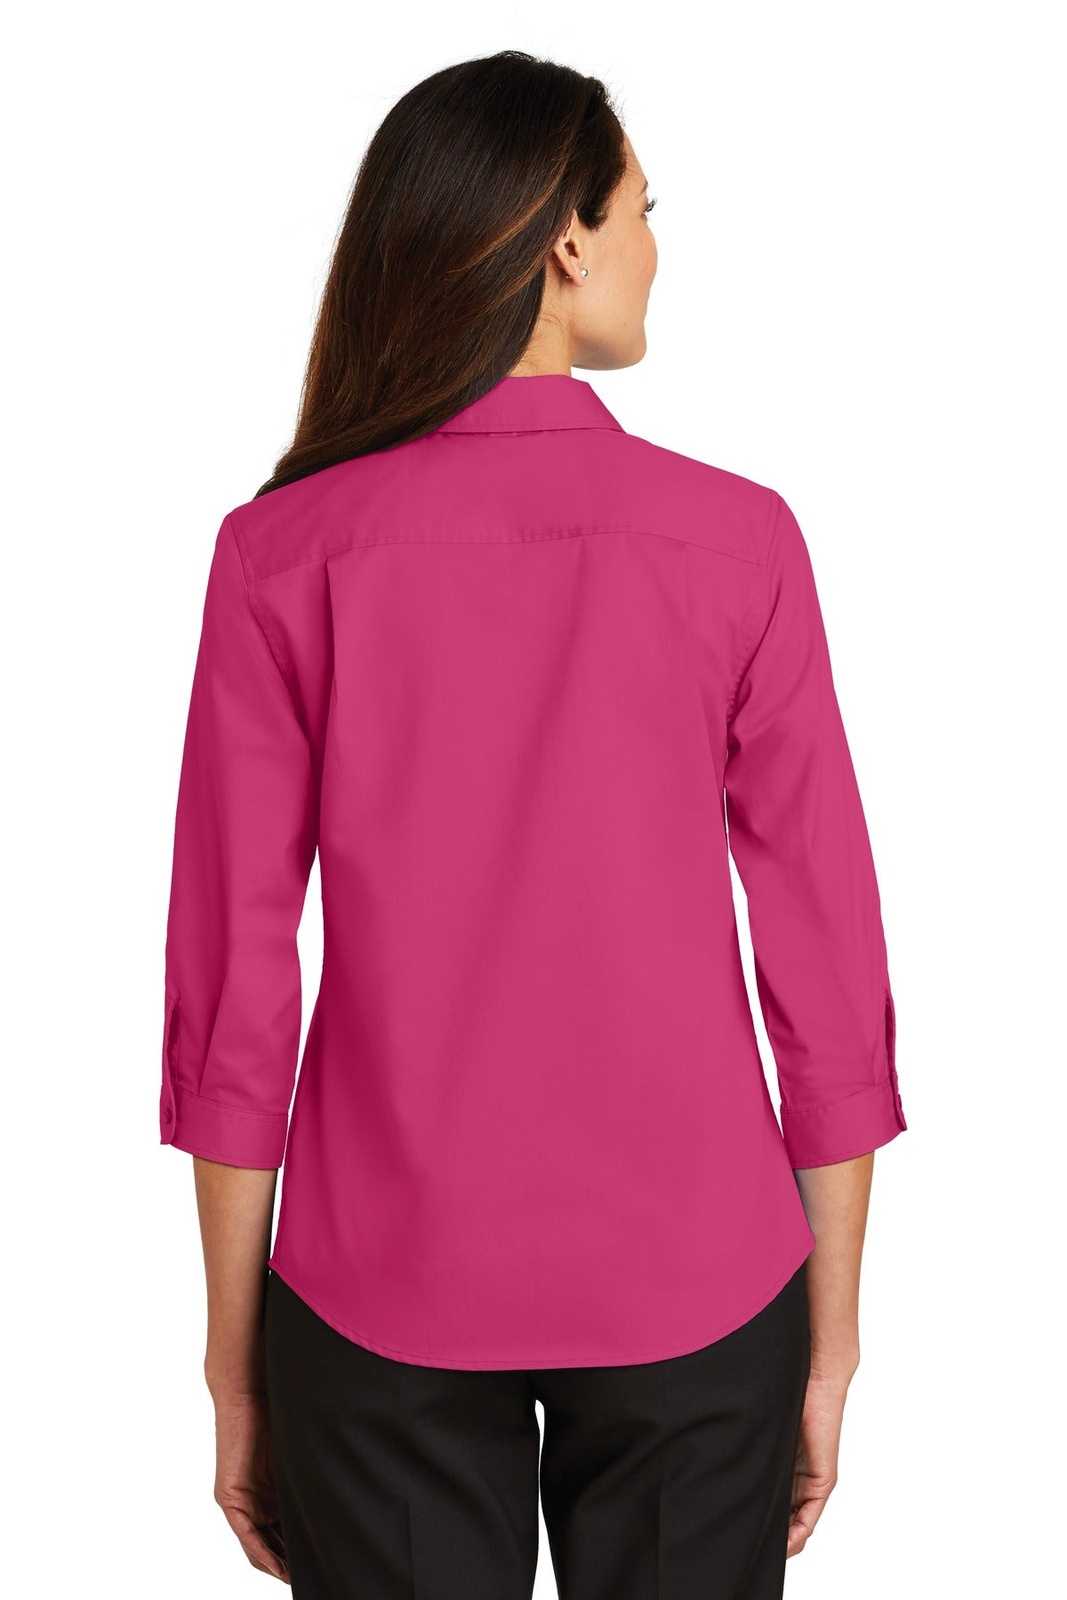 Port Authority L665 Ladies 3/4-Sleeve Superpro Twill Shirt - Pink Azalea - HIT a Double - 2